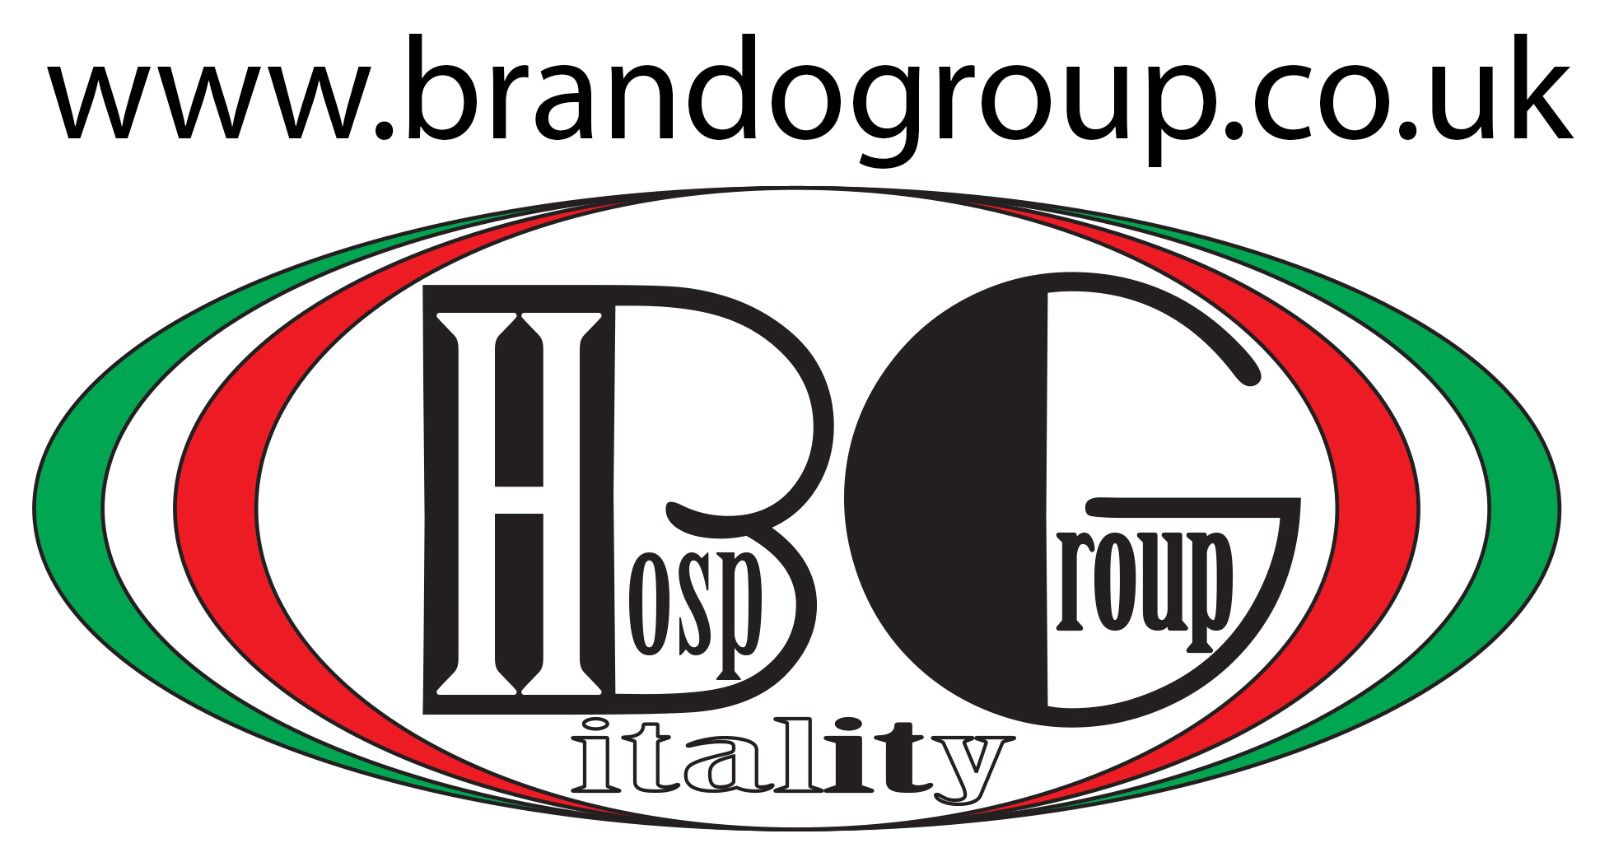 Brando Group